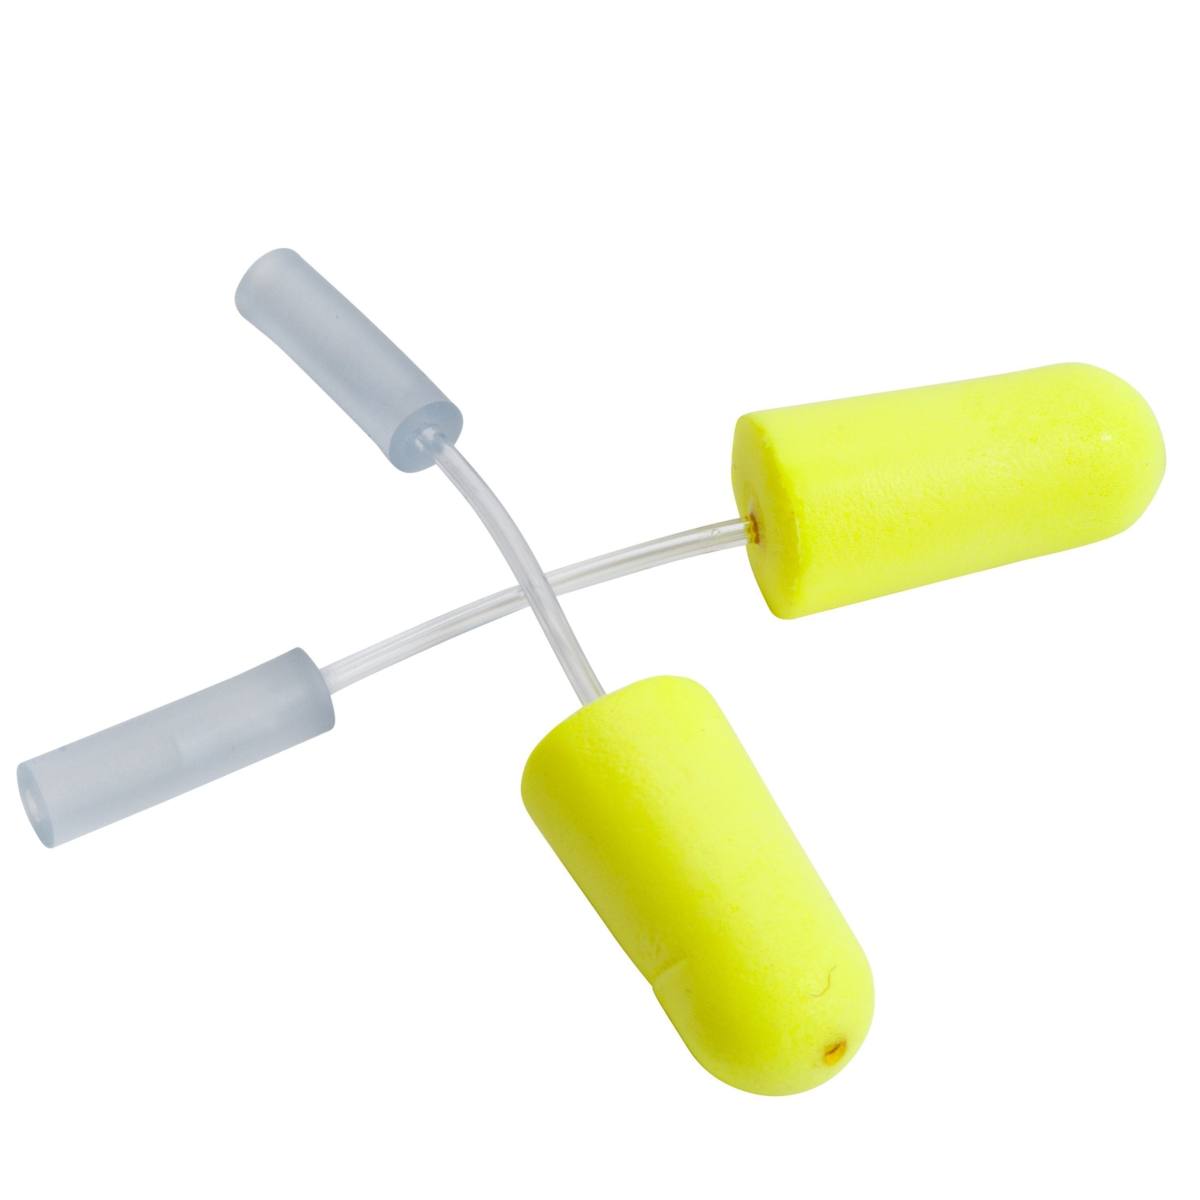 3M E-A-R E-A-Rsoft neon yellow earplugs for fit testing, 393-2000-50